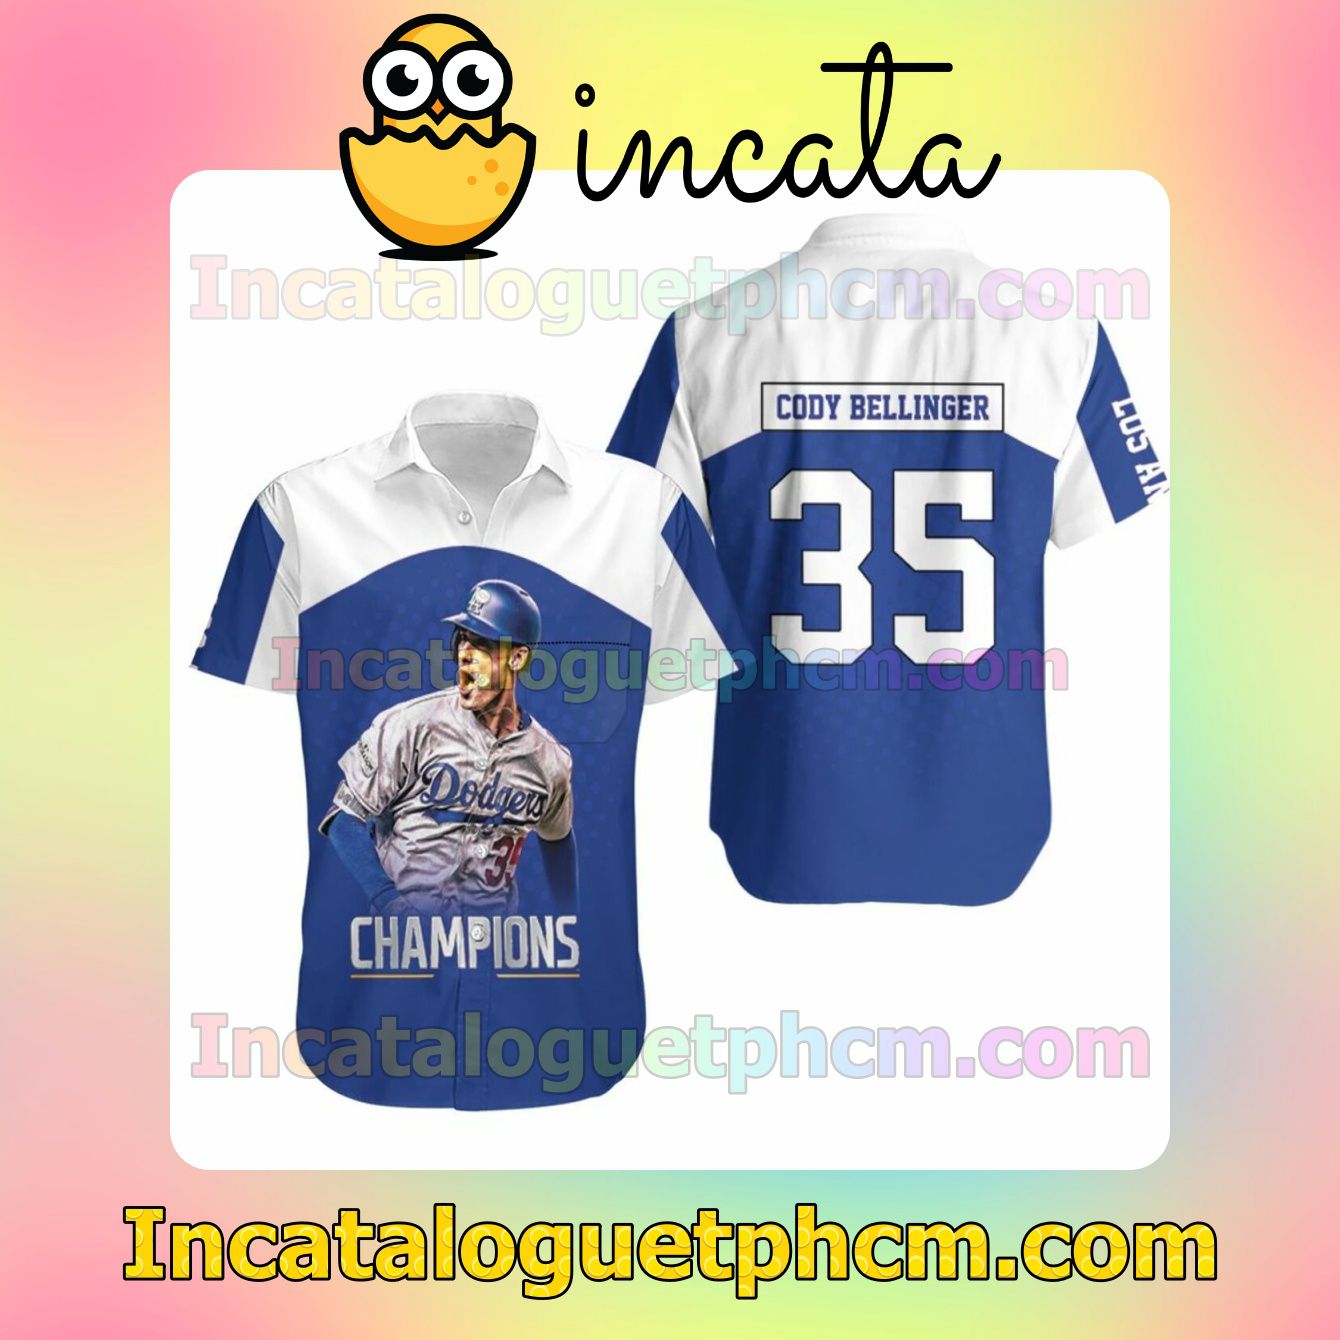 Los Angeles Dodgers Cody Bellinger 35 Champions Custom Short Sleeve Shirt